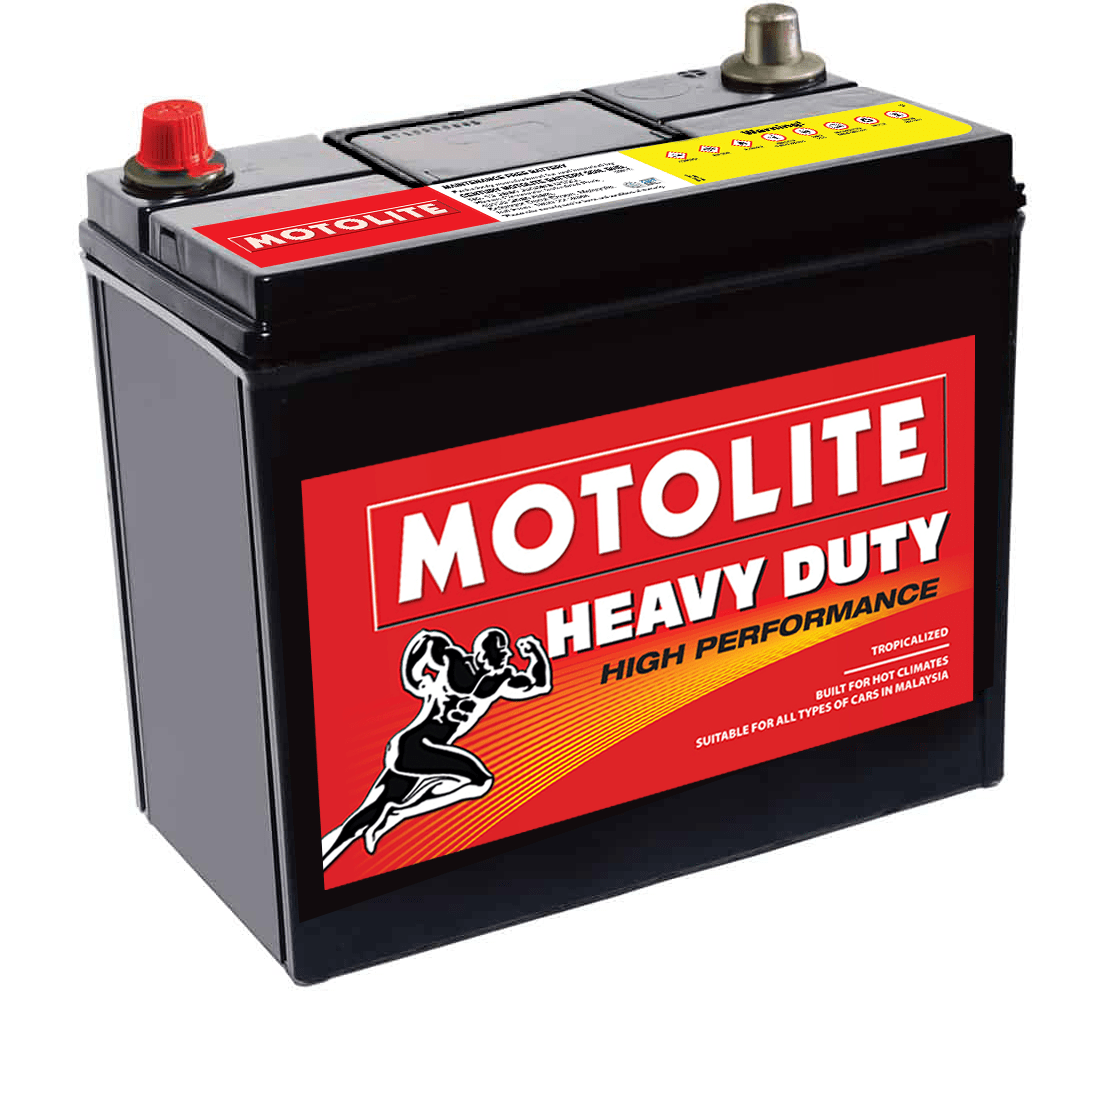 Motolite Heavy Duty